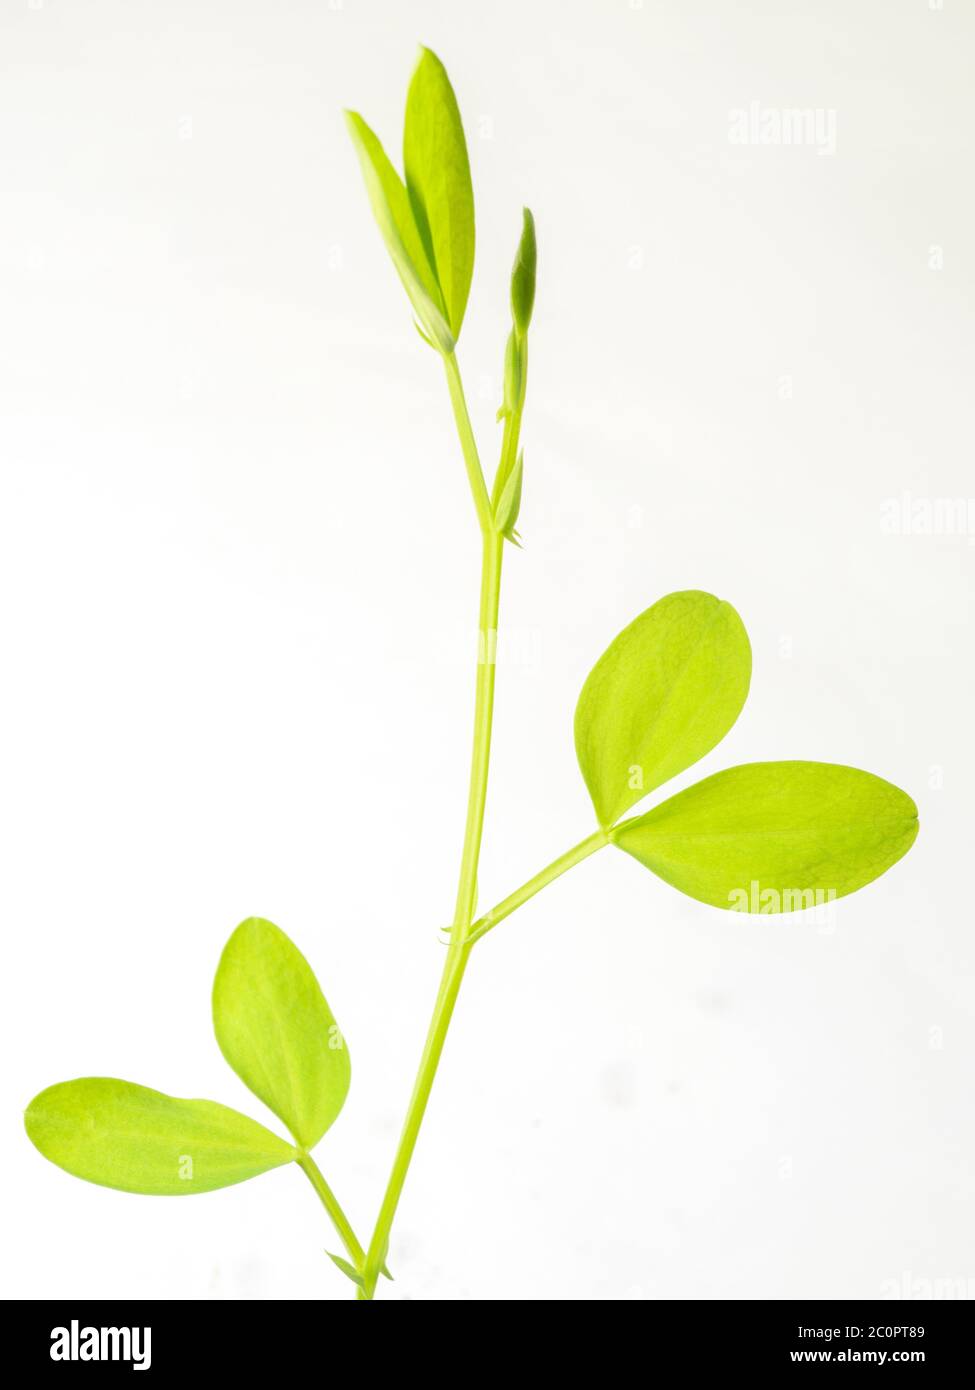 Lathyrus chloranthus sweet peas seedling against a white background Stock Photo